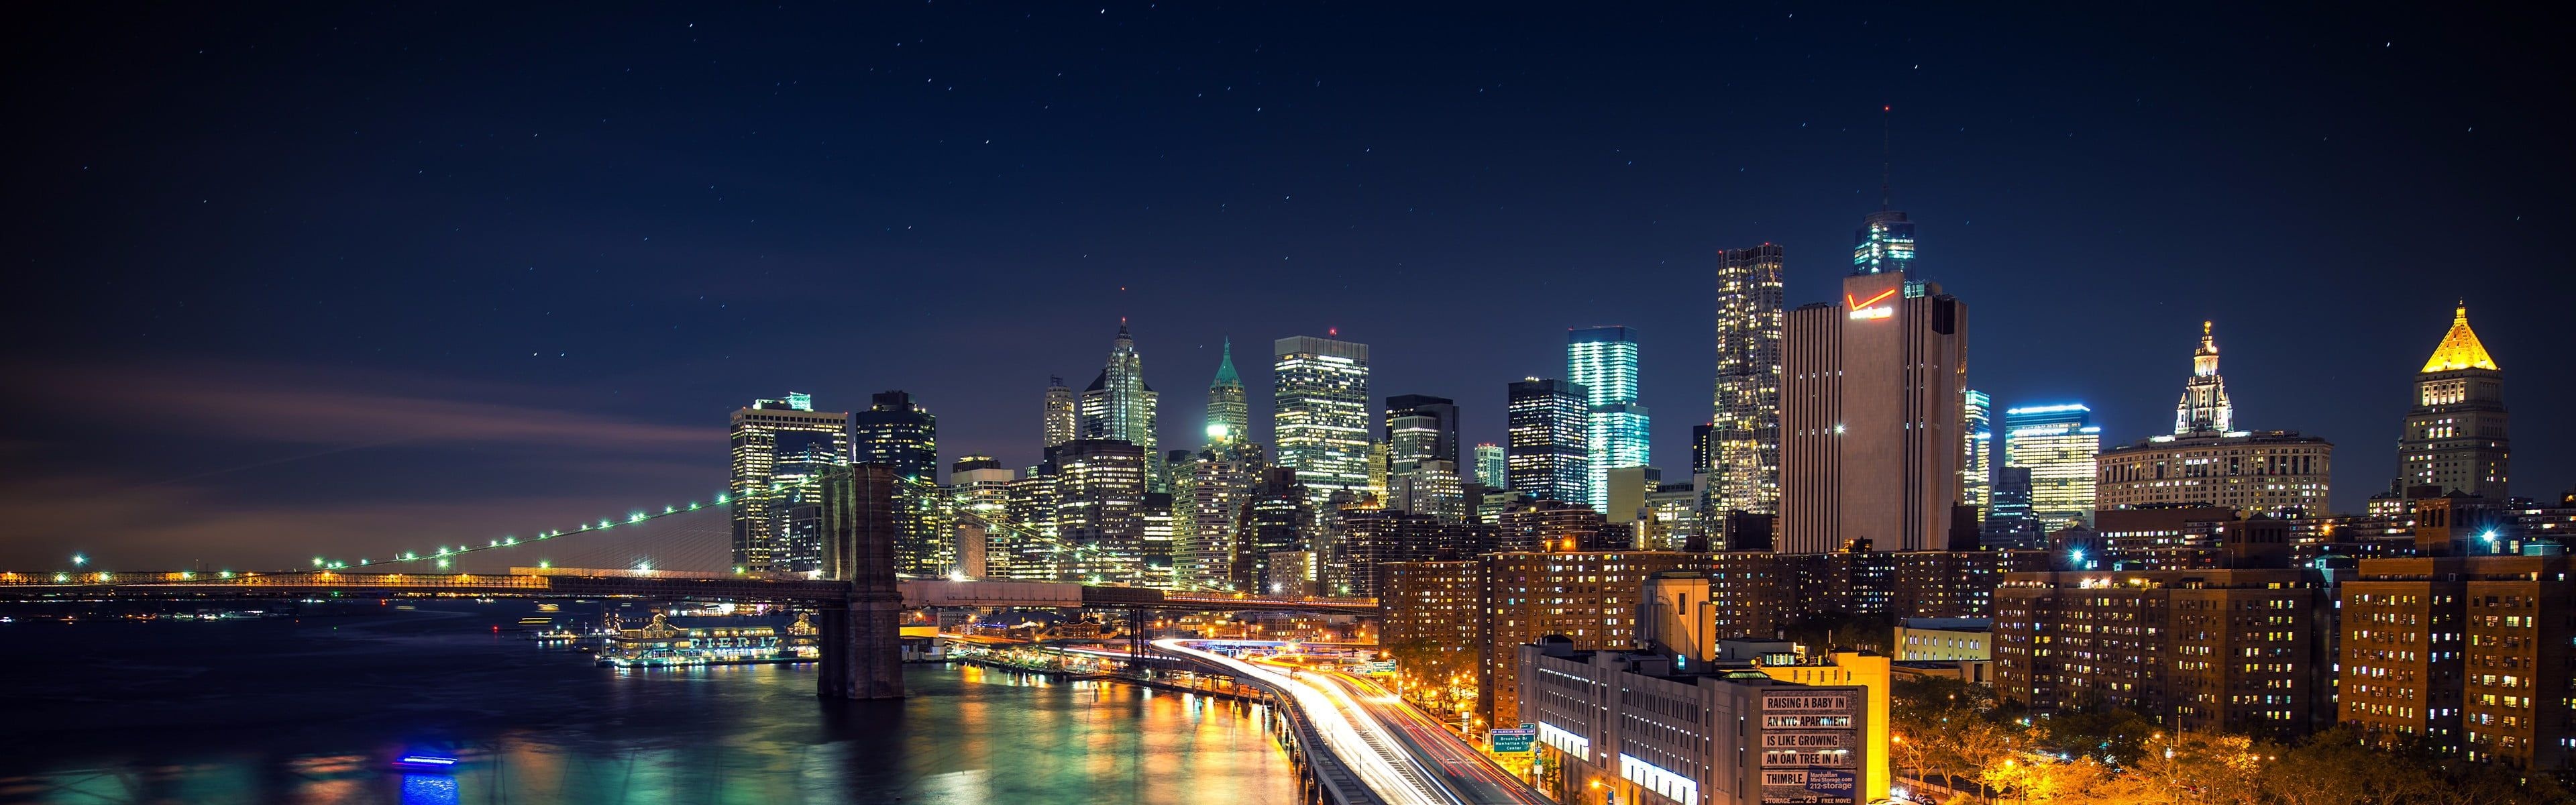 Cityscape: Brooklyn Bridge at night, Amazing city lights, Empire State Building, Manhattan, New York. 3840x1200 Dual Screen Wallpaper.